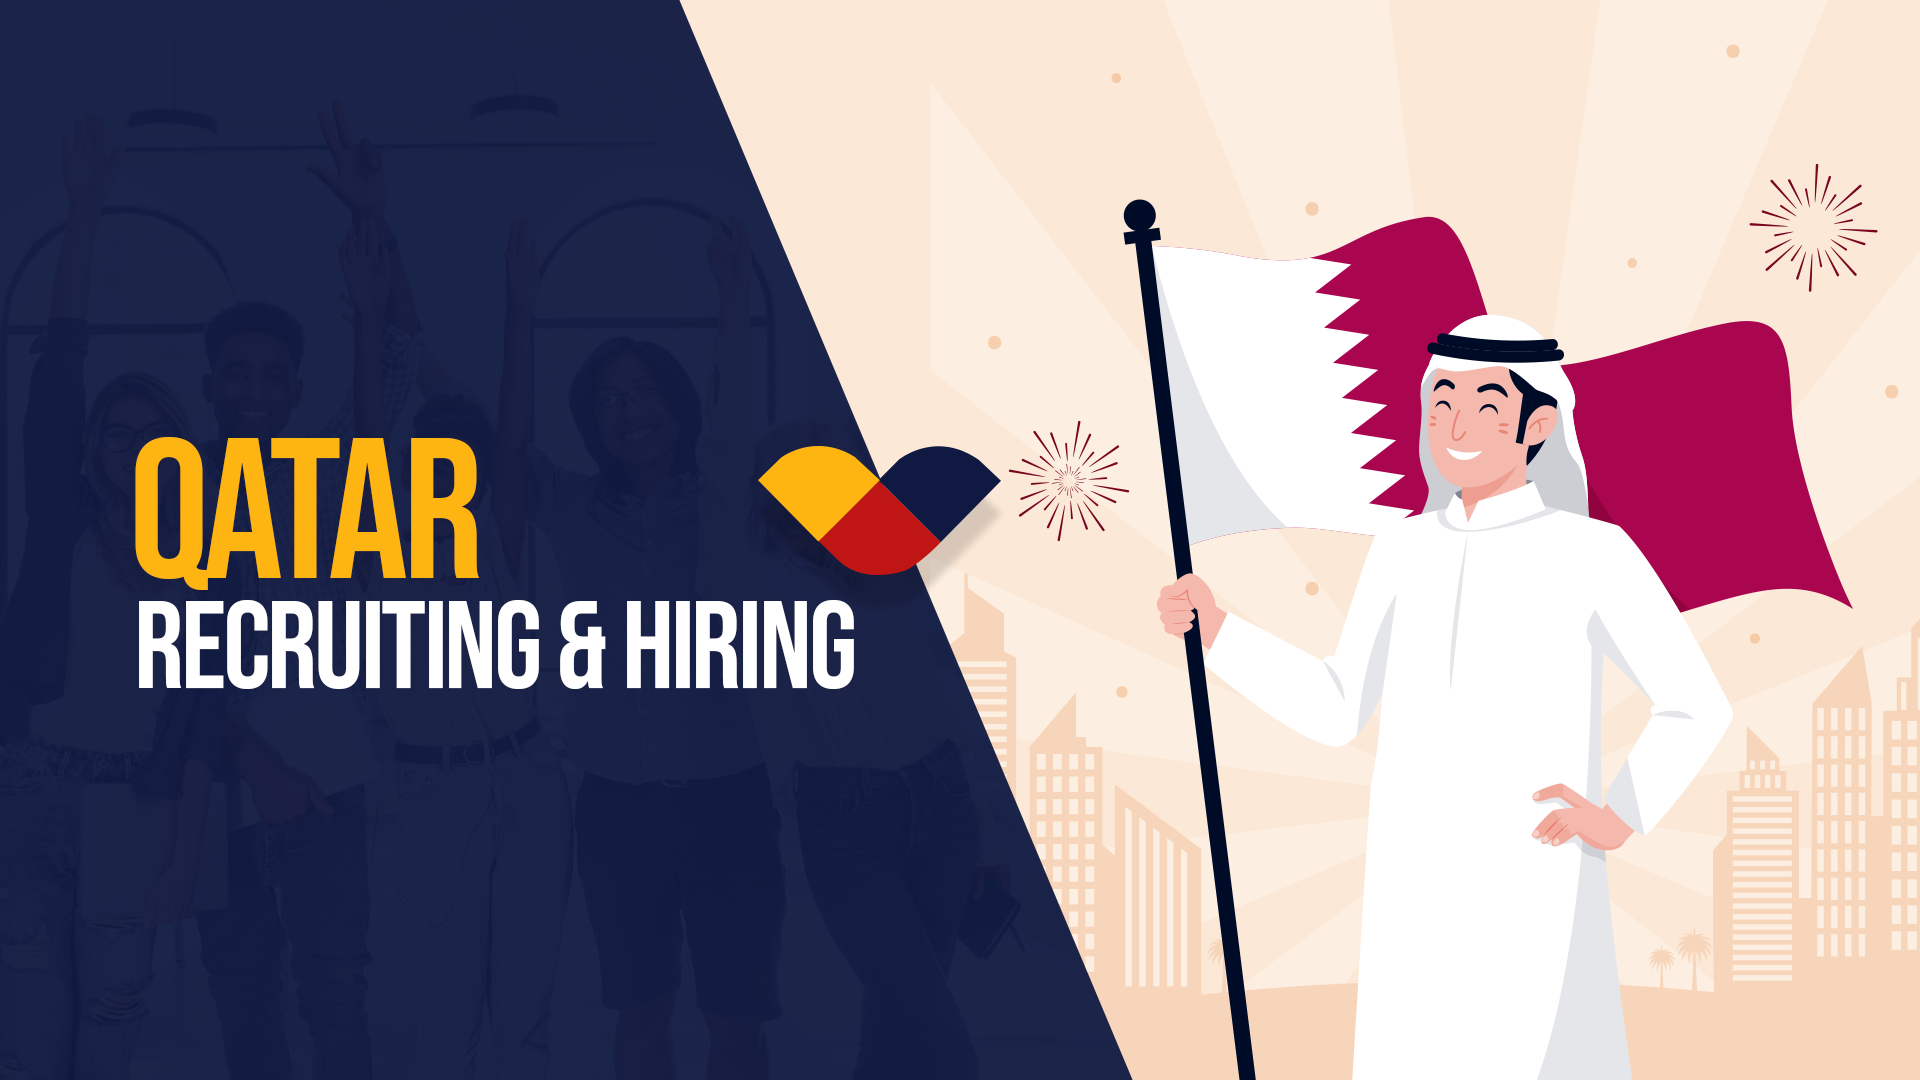 Qatar recruiting and hiring